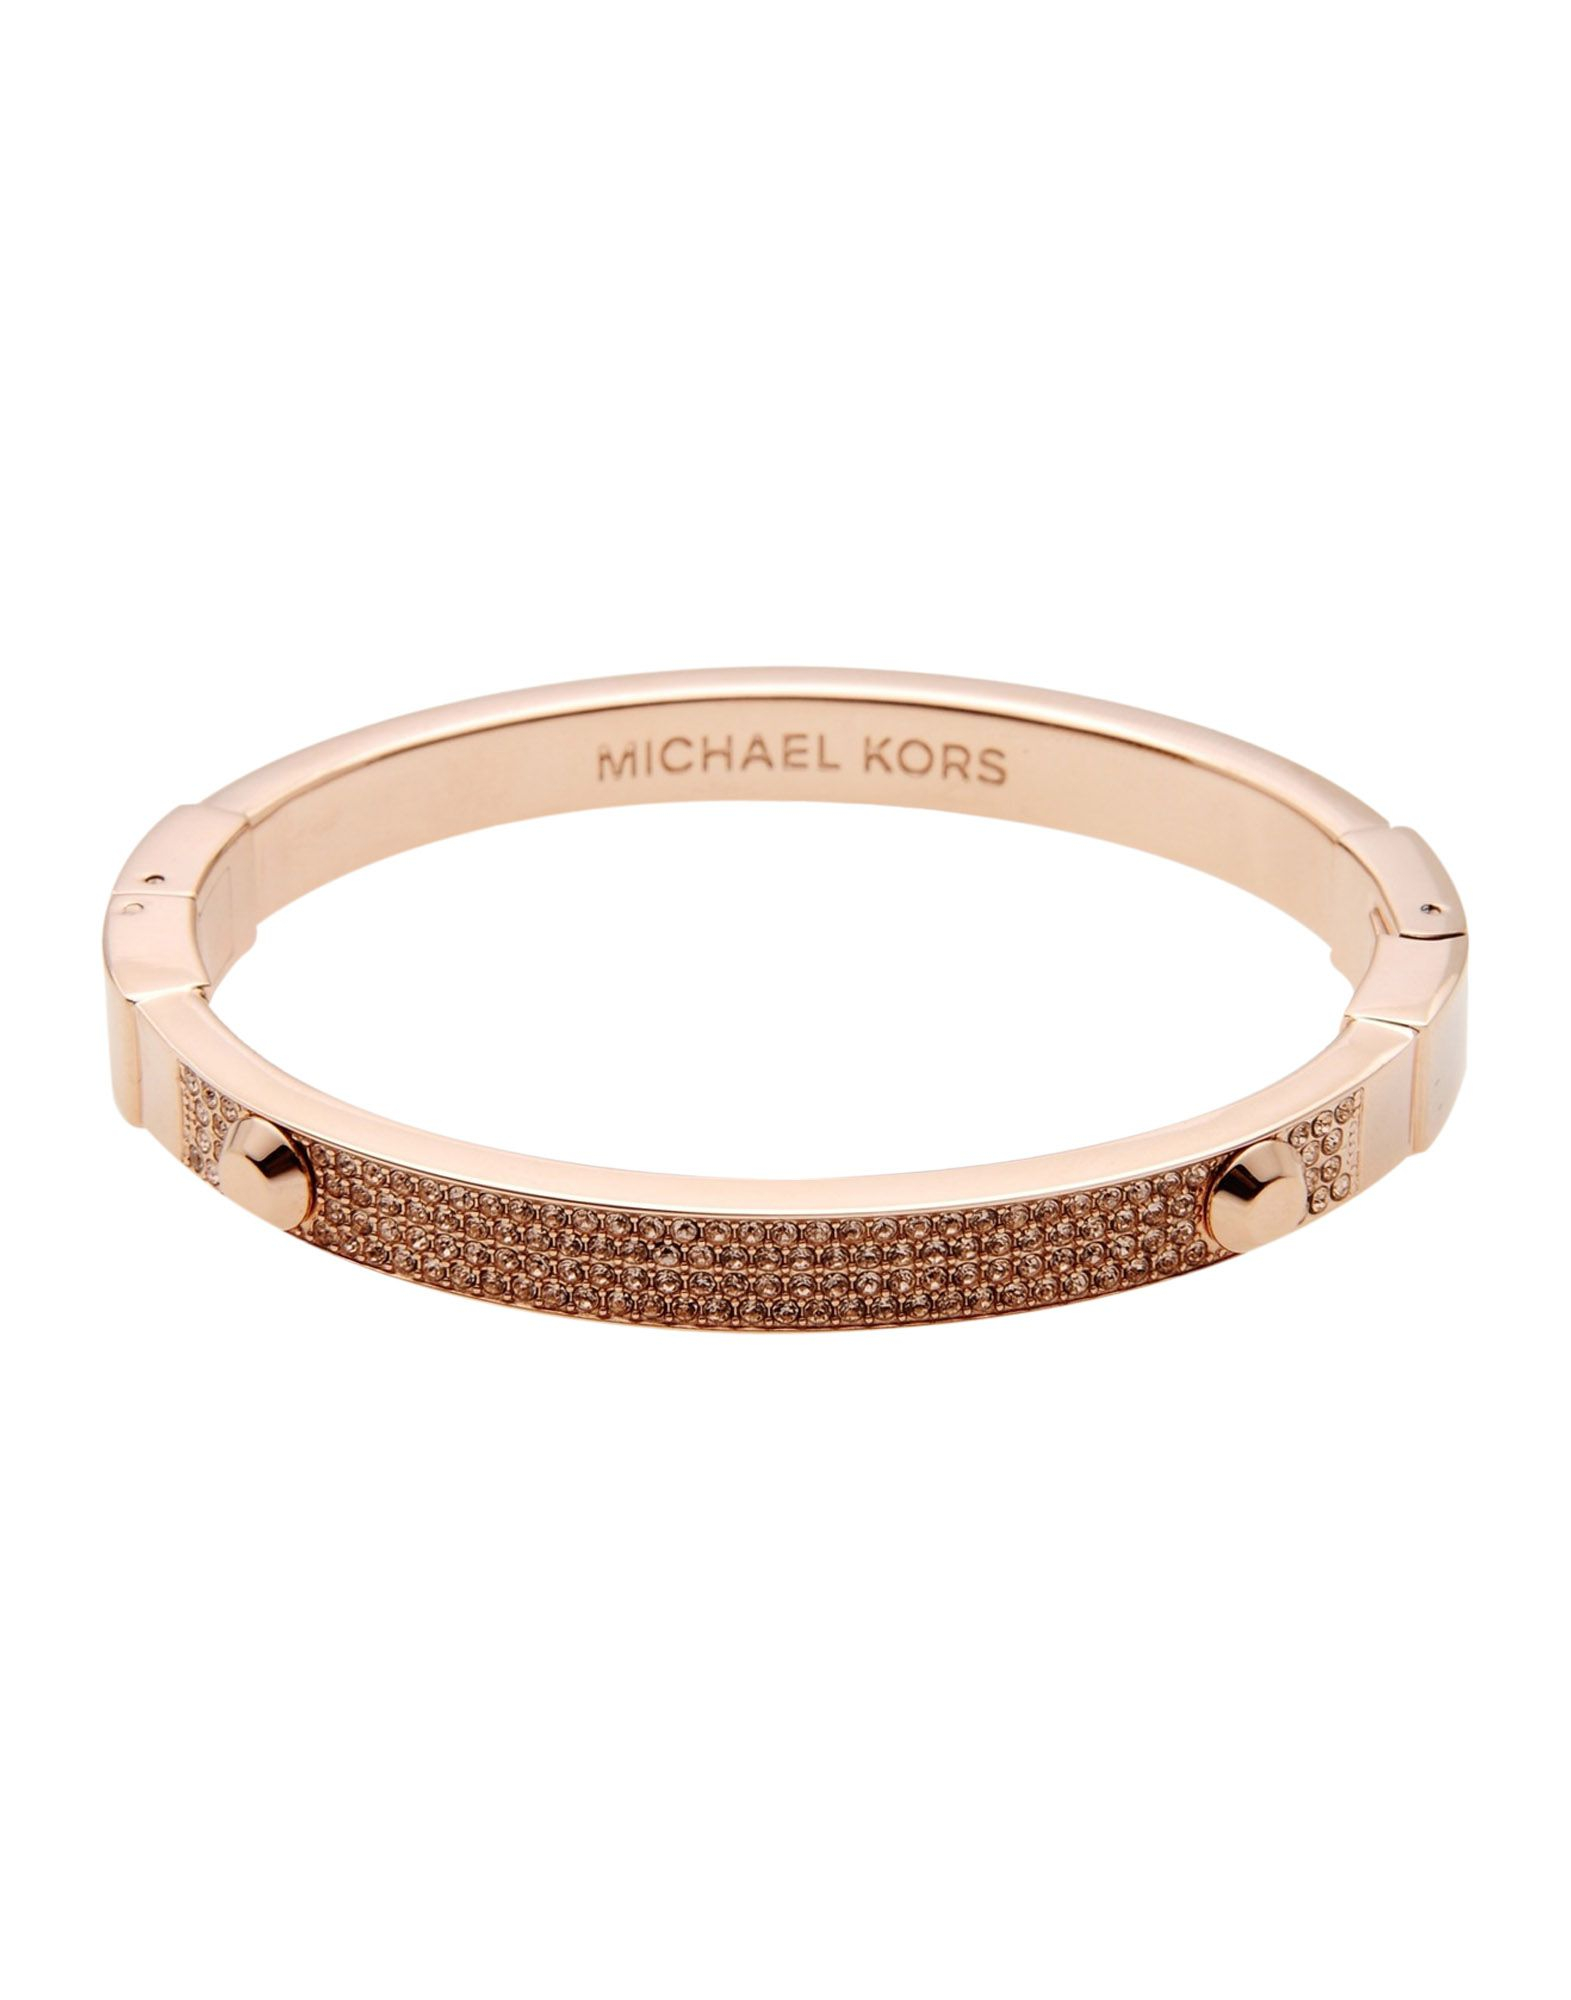 Lyst - Michael Kors Bracelet in Metallic